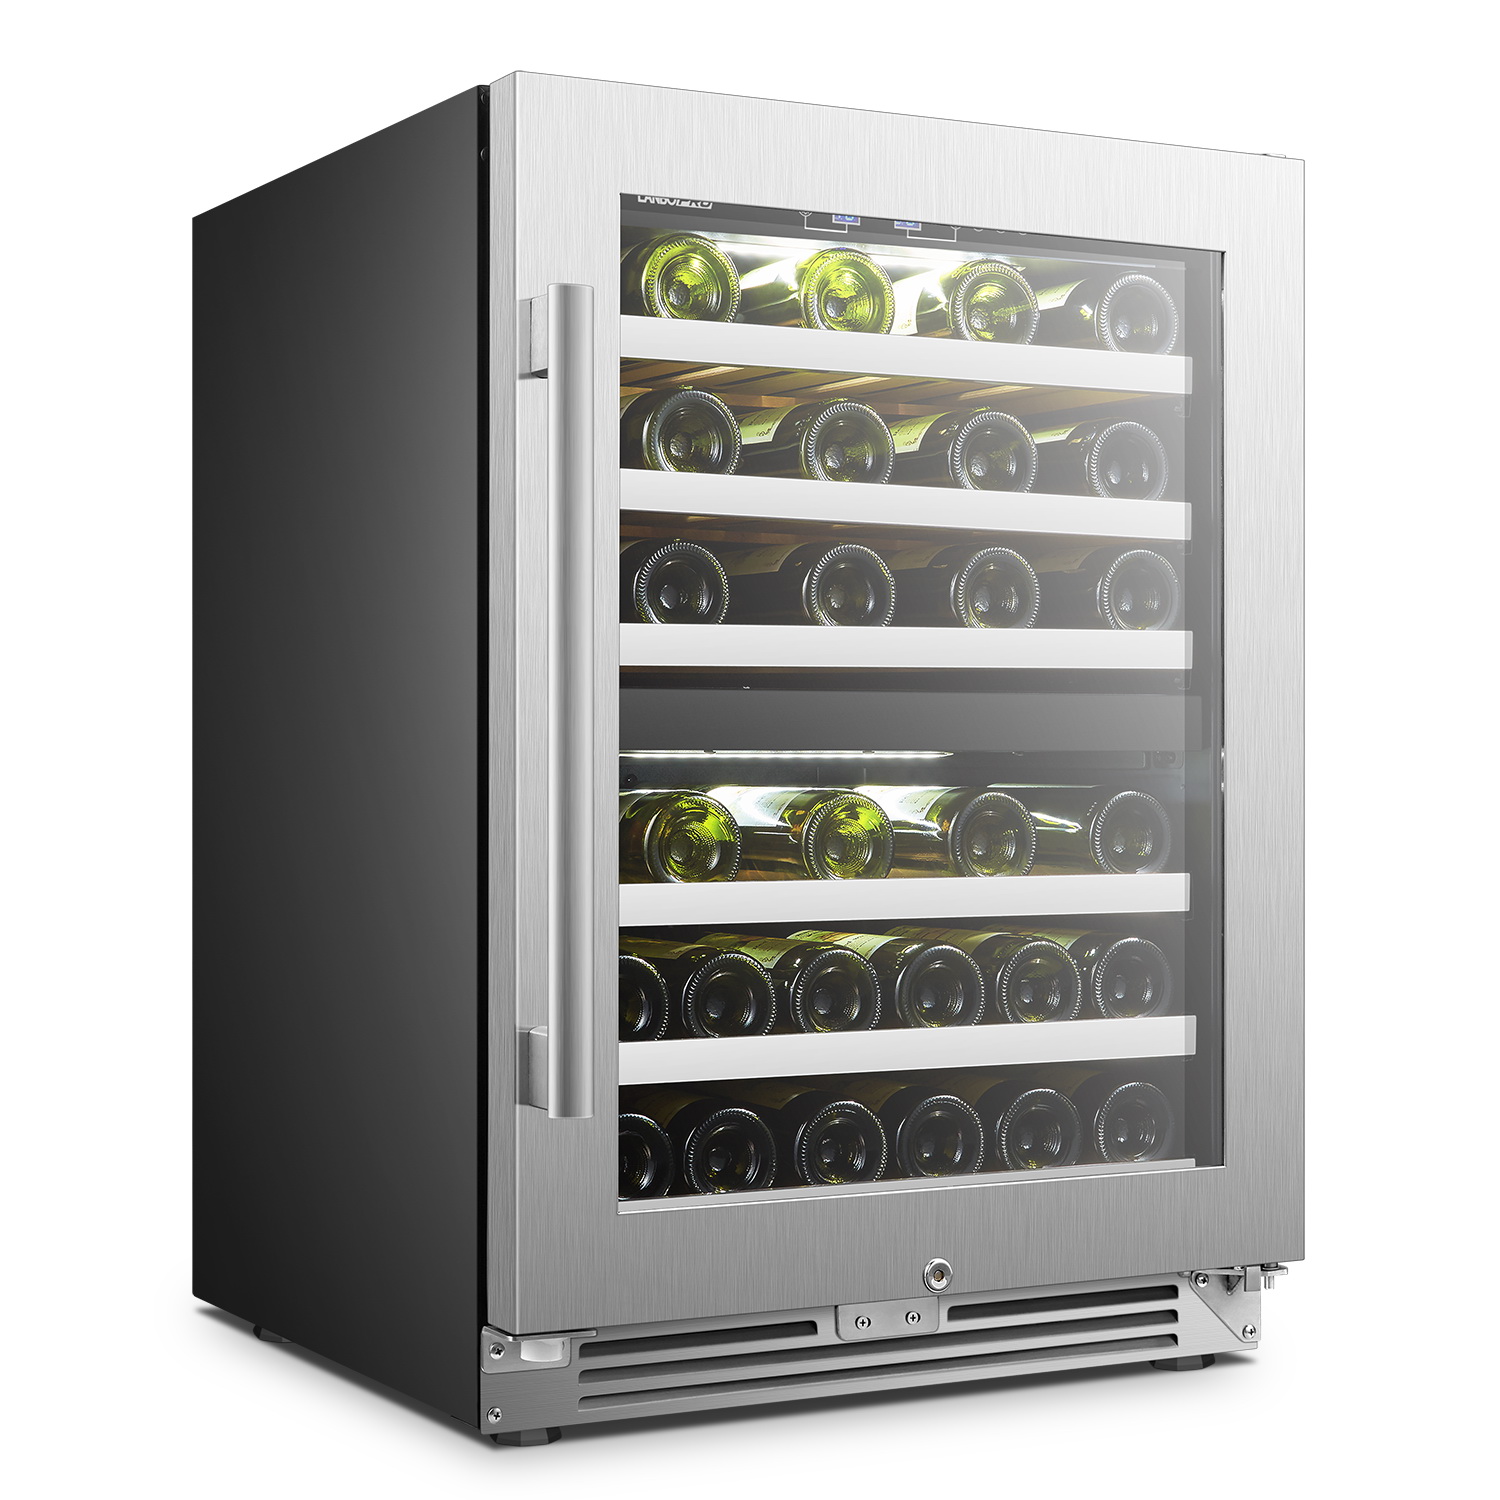 LanboPro 44 Bottle Wine Refrigerator Cooler, Seamless Stainless Steel Trimmed Door and Dual Temperature Zones, 24 Inch